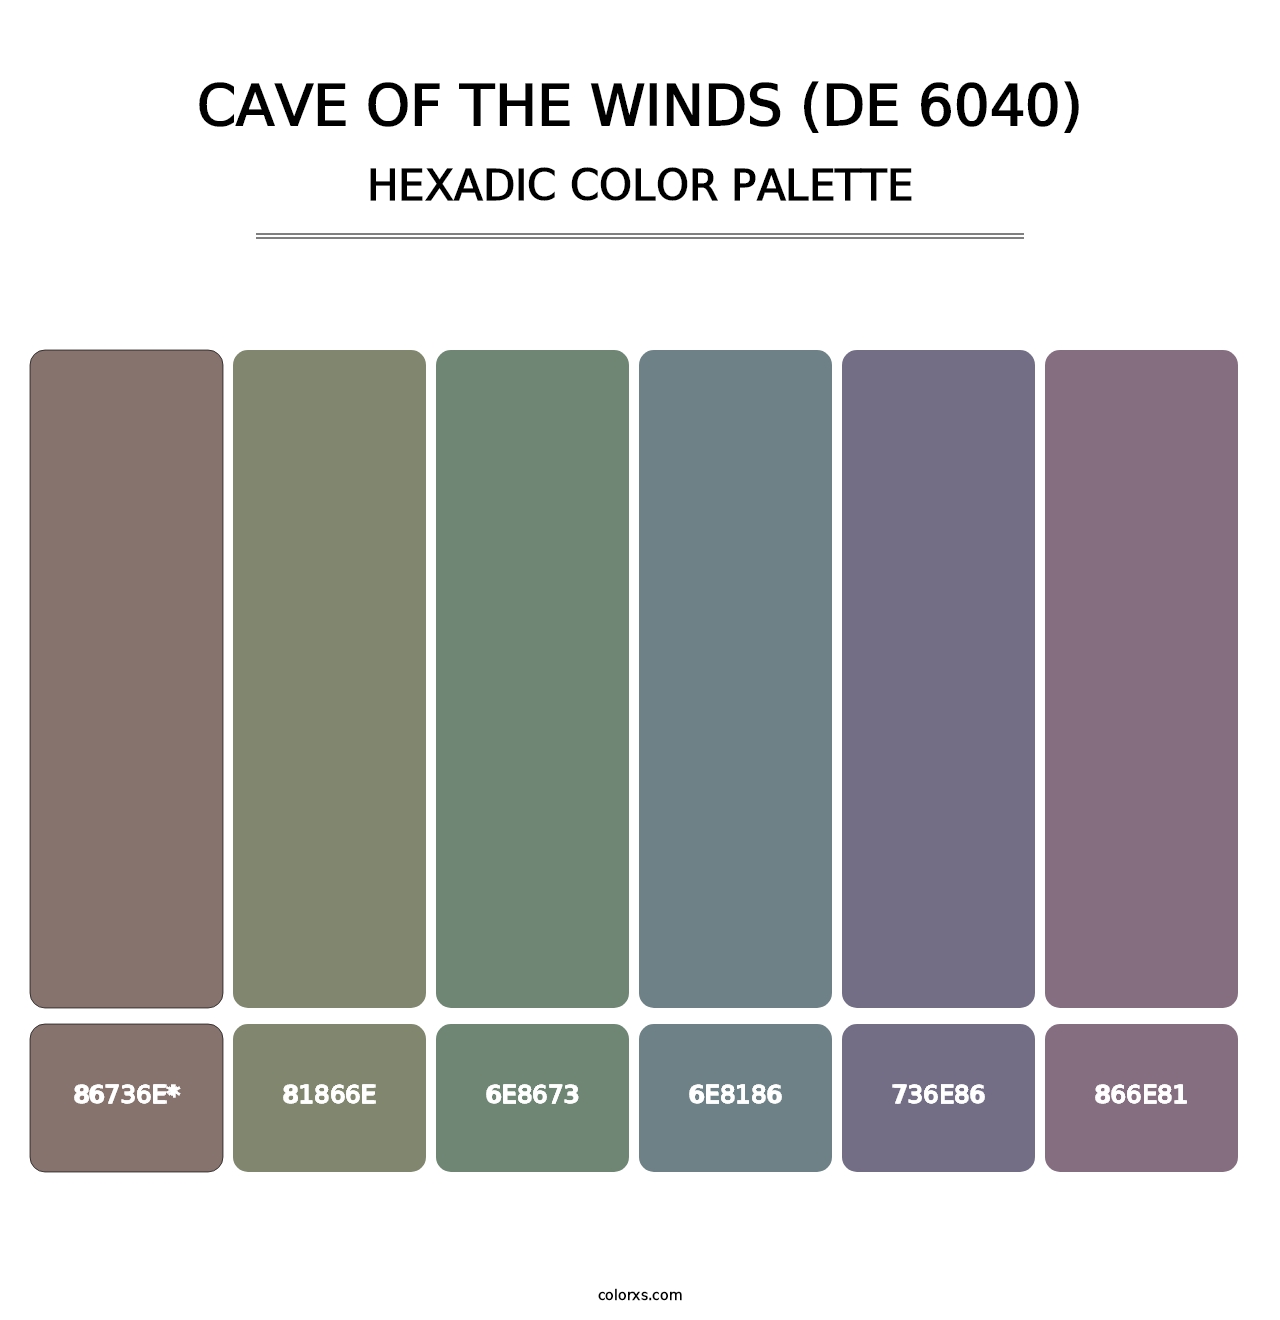 Cave of the Winds (DE 6040) - Hexadic Color Palette